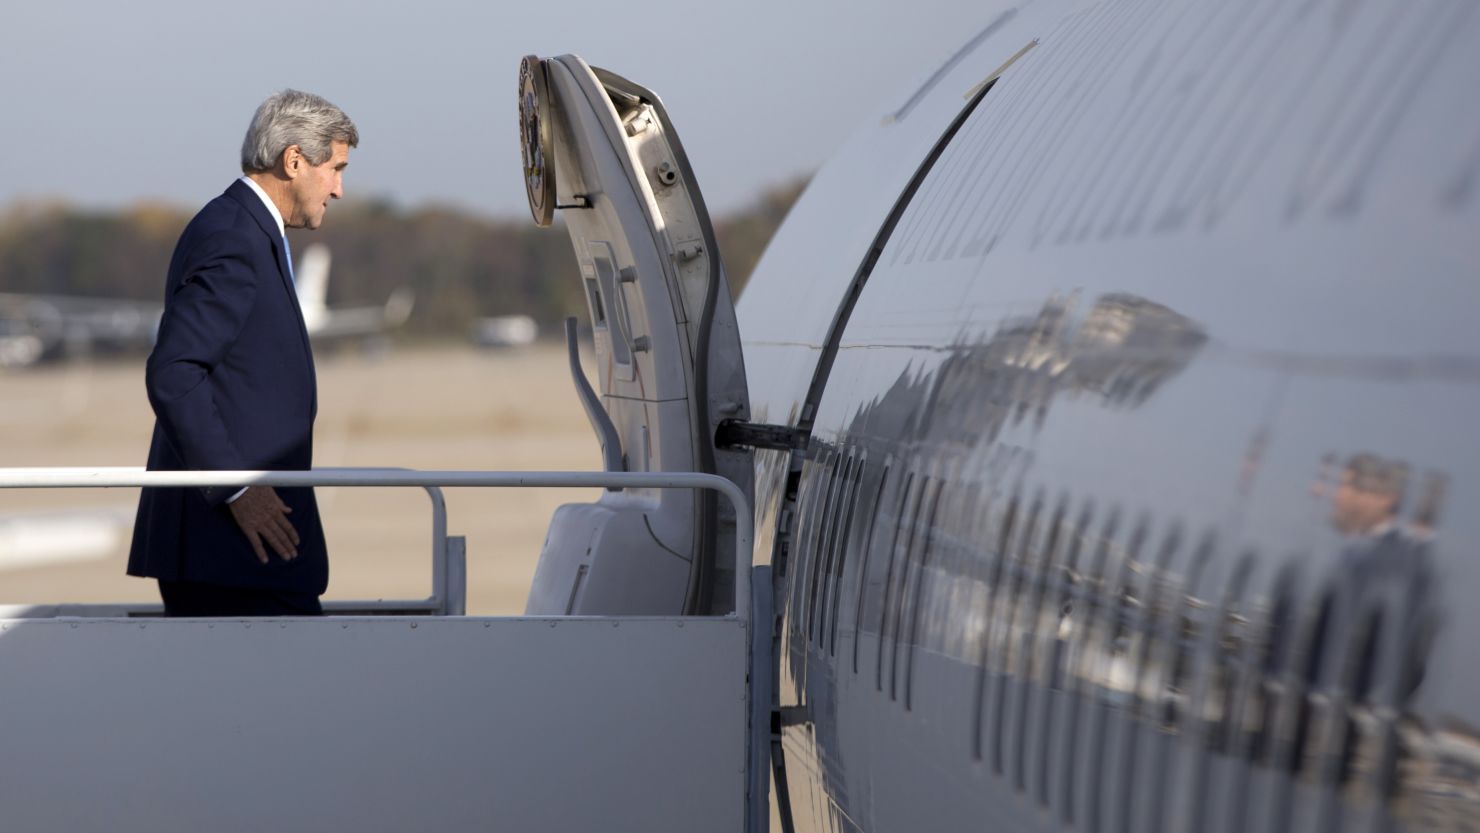 John Kerry boards his plane en route to Ottawa, Canada.